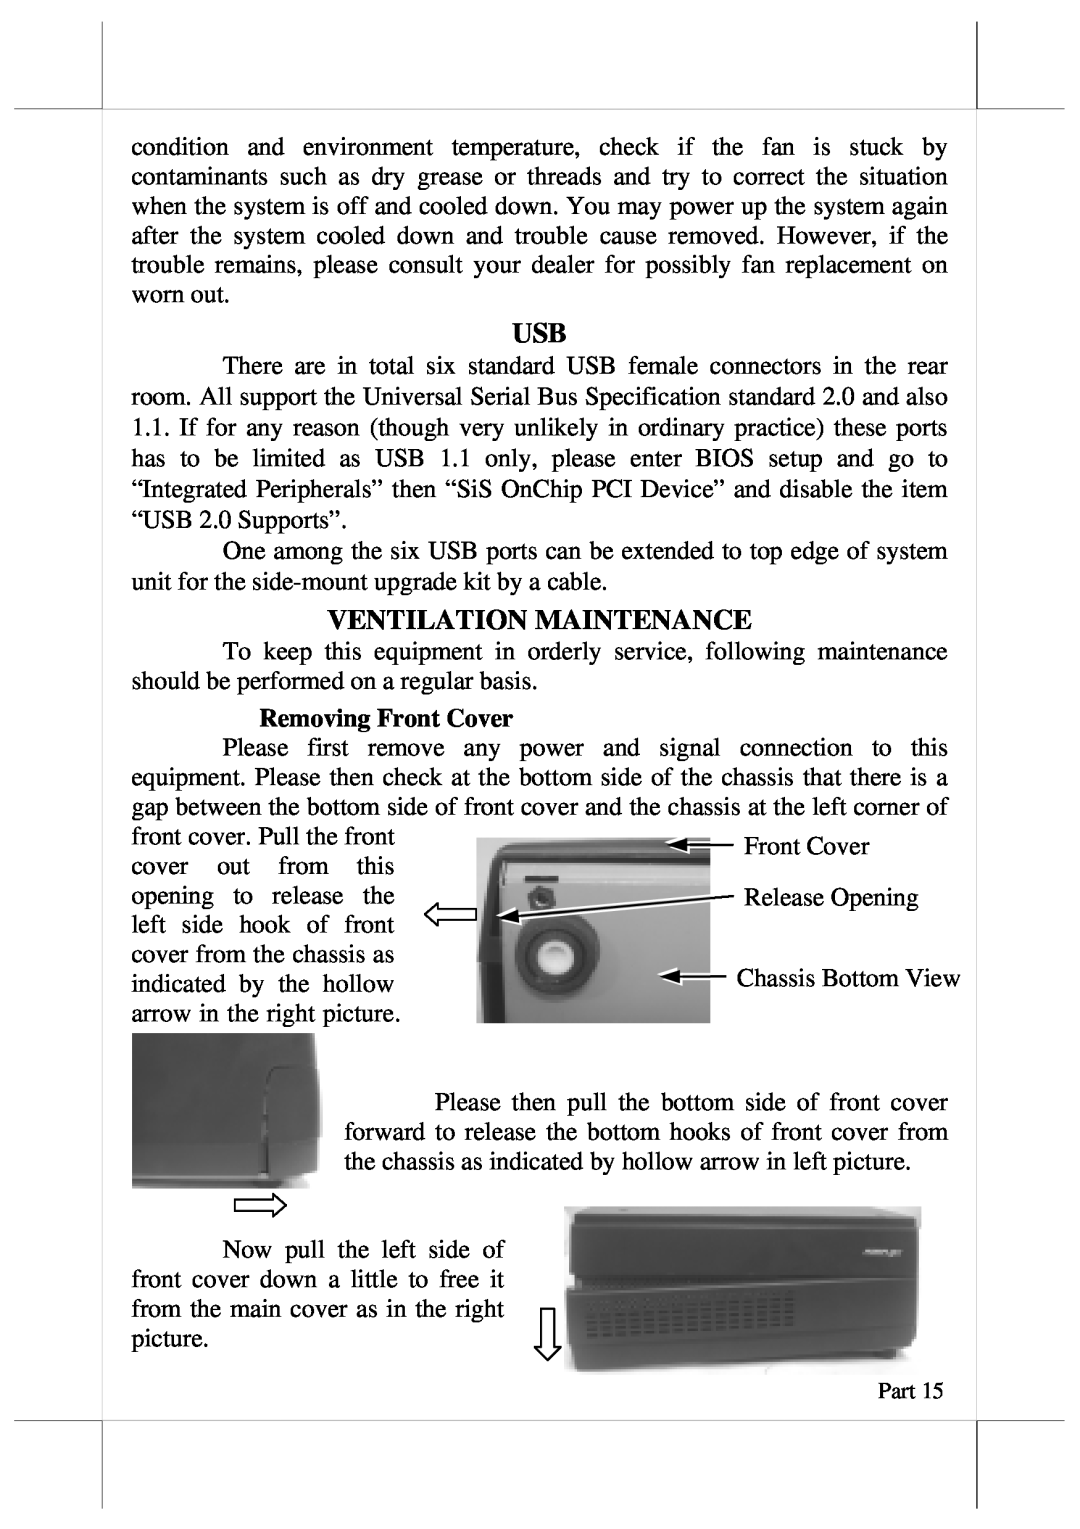 Aigo PB2200 user manual Ventilation Maintenance, Removing Front Cover 